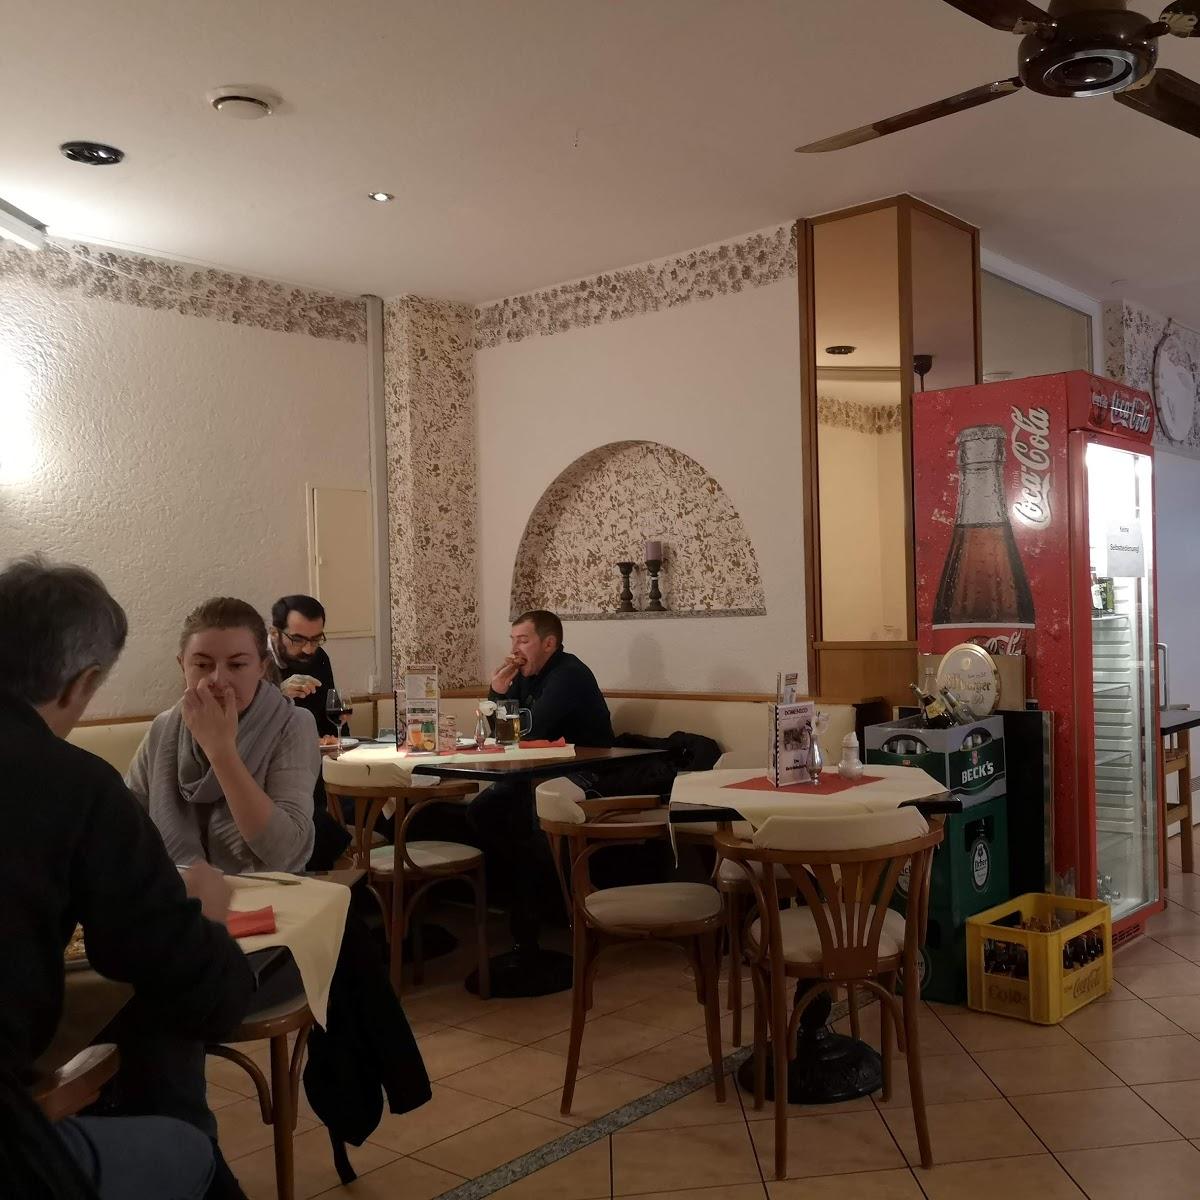 Restaurant "Pizzeria Domenico" in Hanau